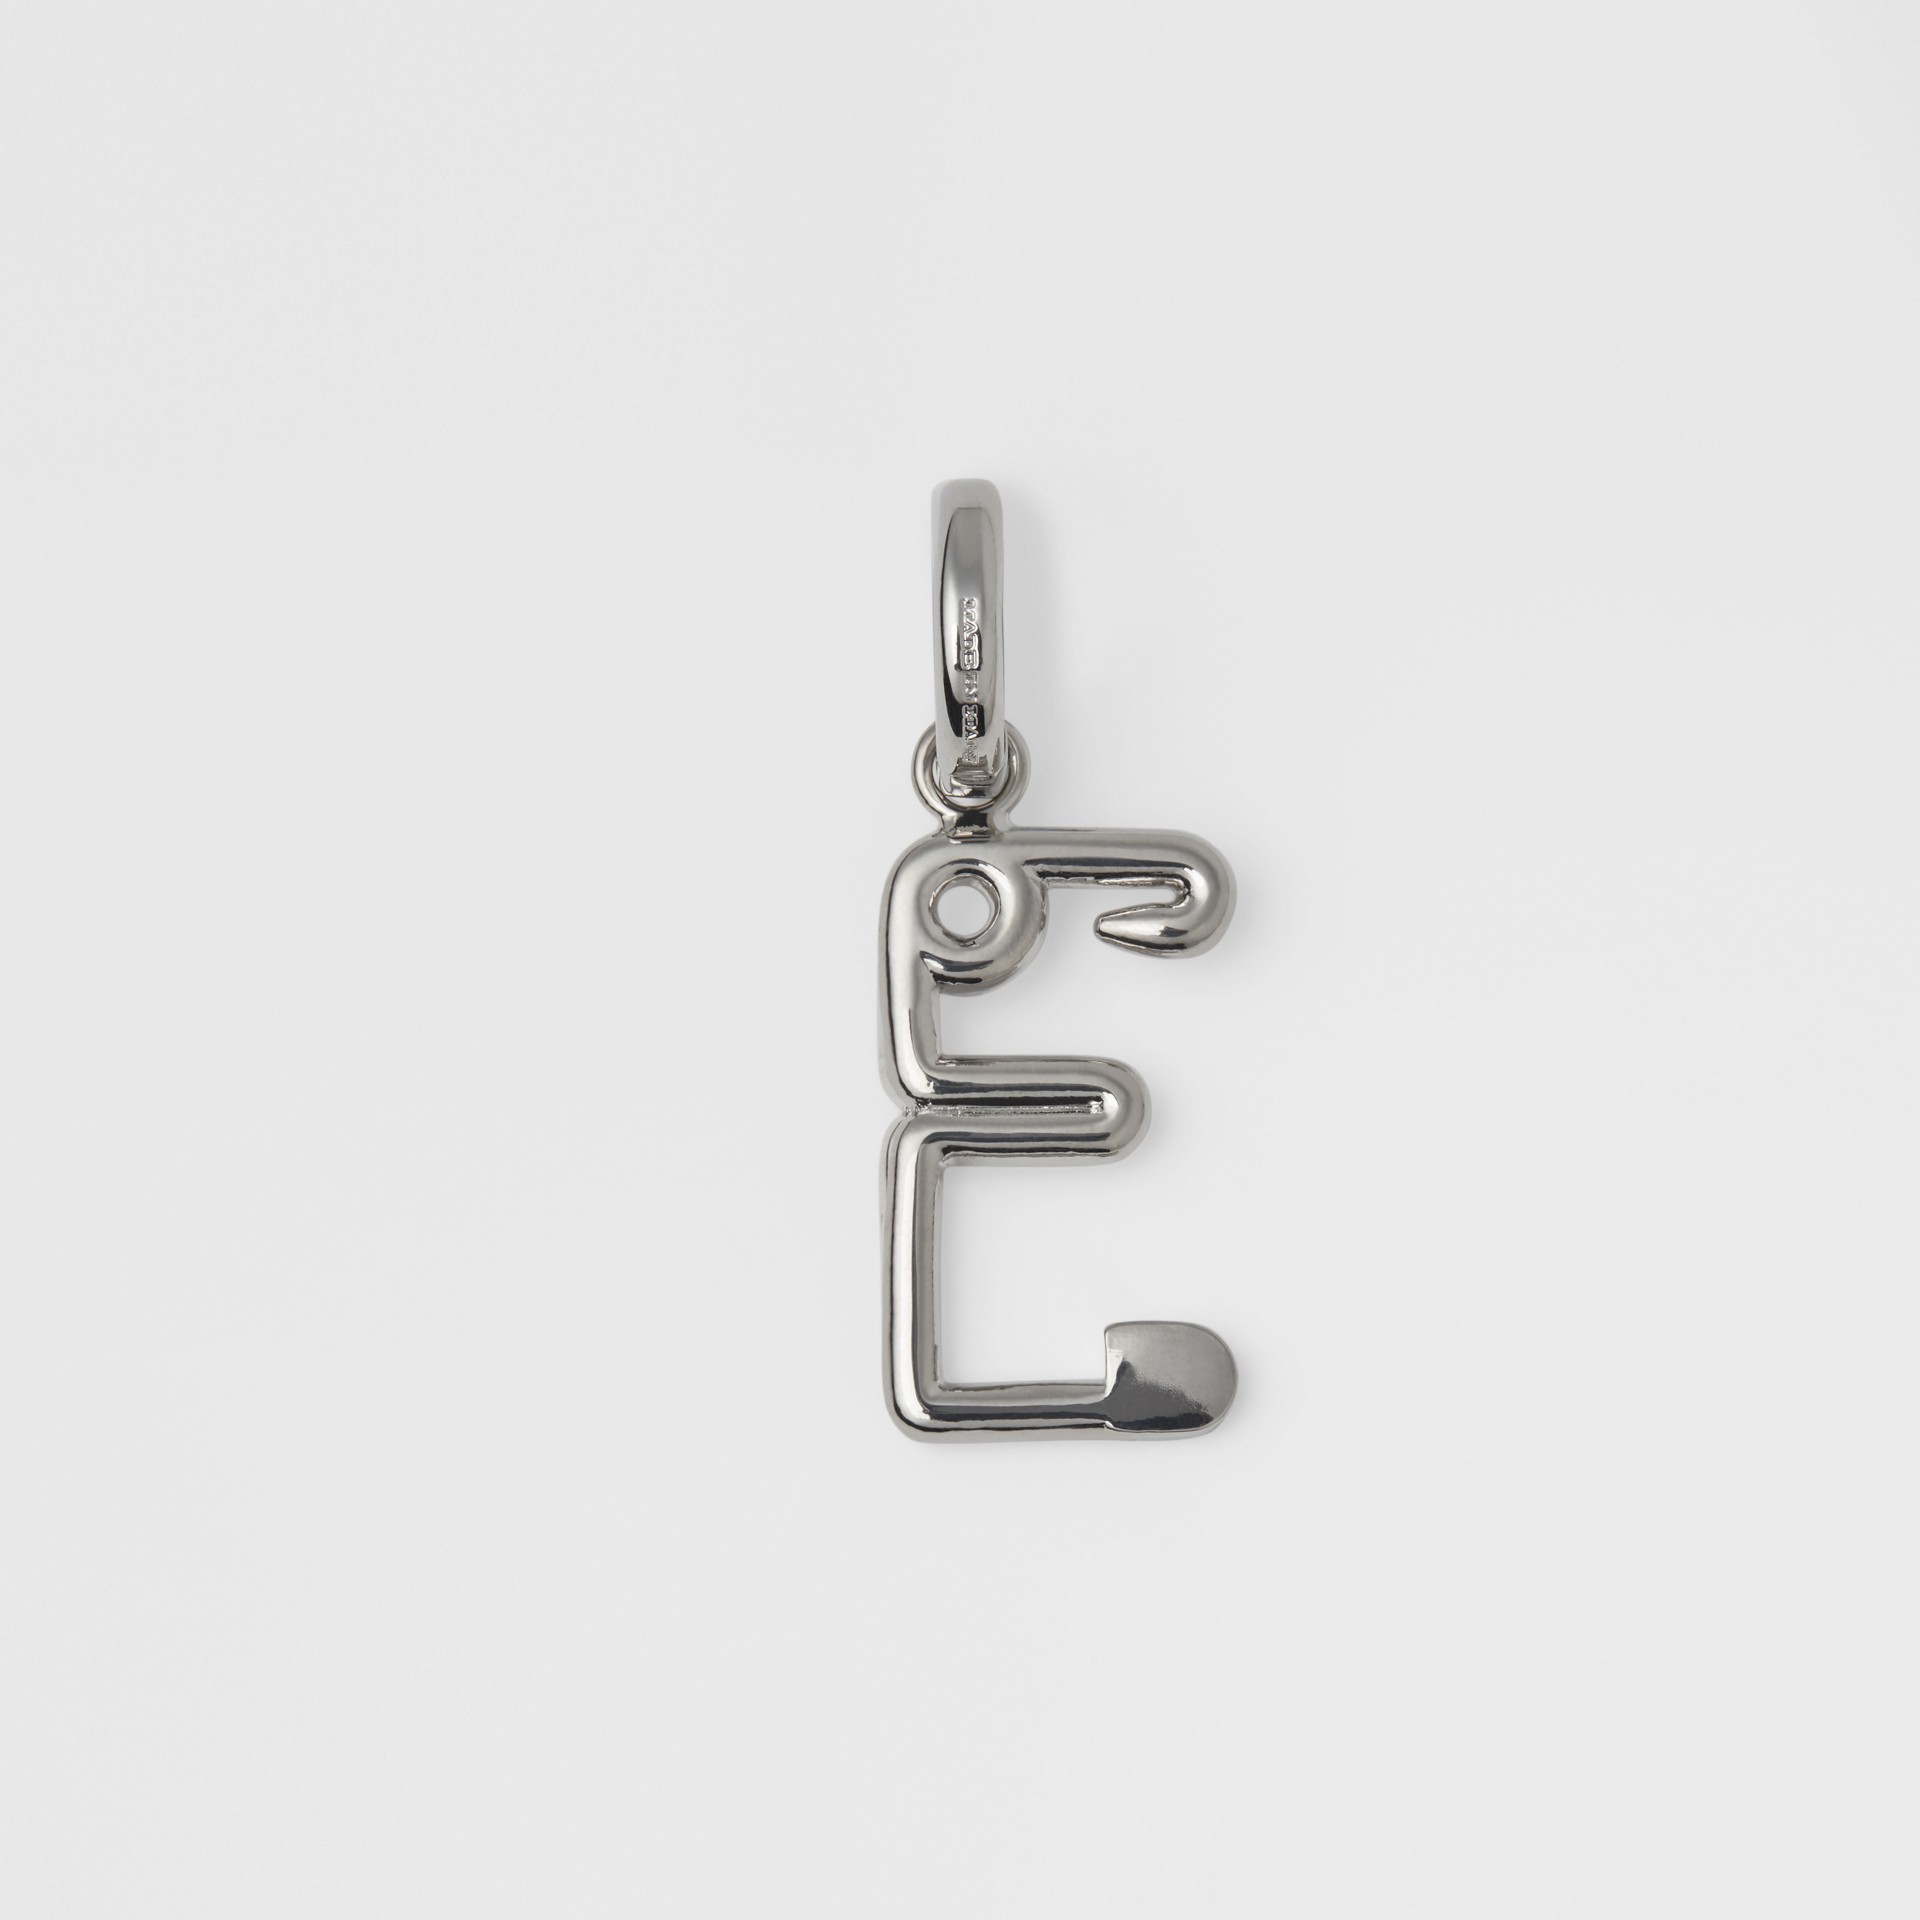 BURBERRY Kilt Pin ‘E’ Alphabet Charm